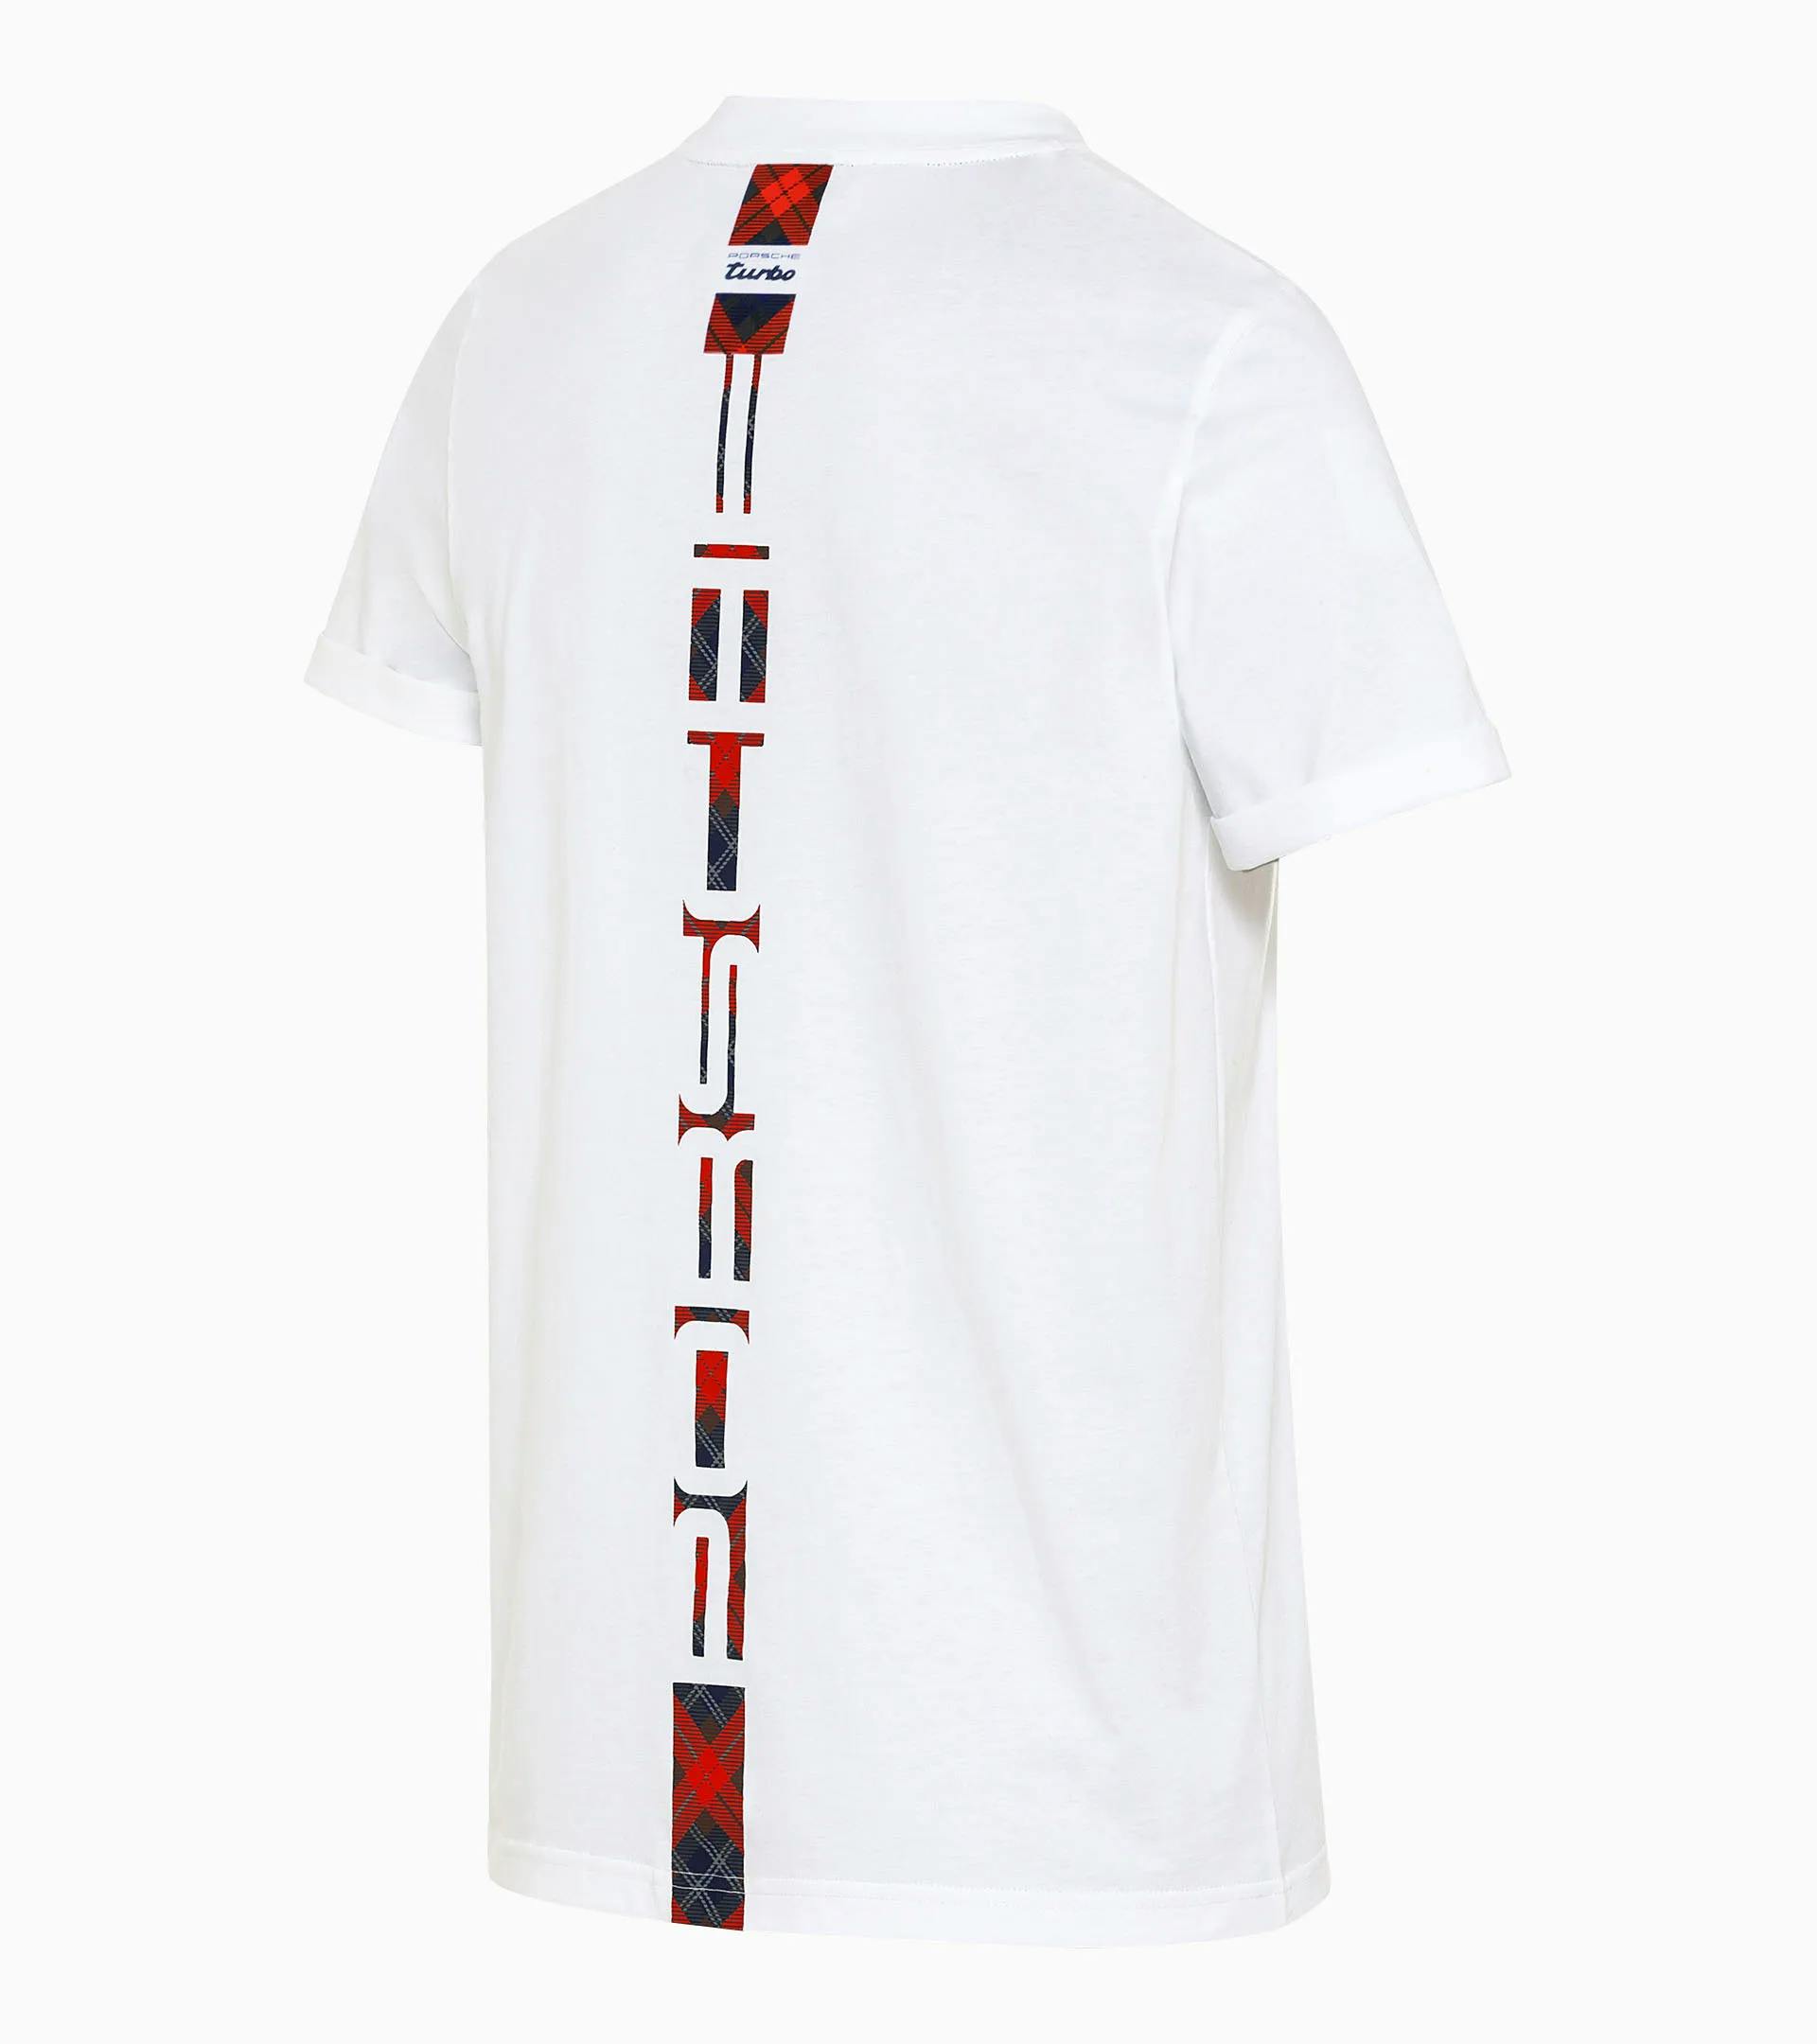 Unisex T-shirt – Turbo No. 1 1